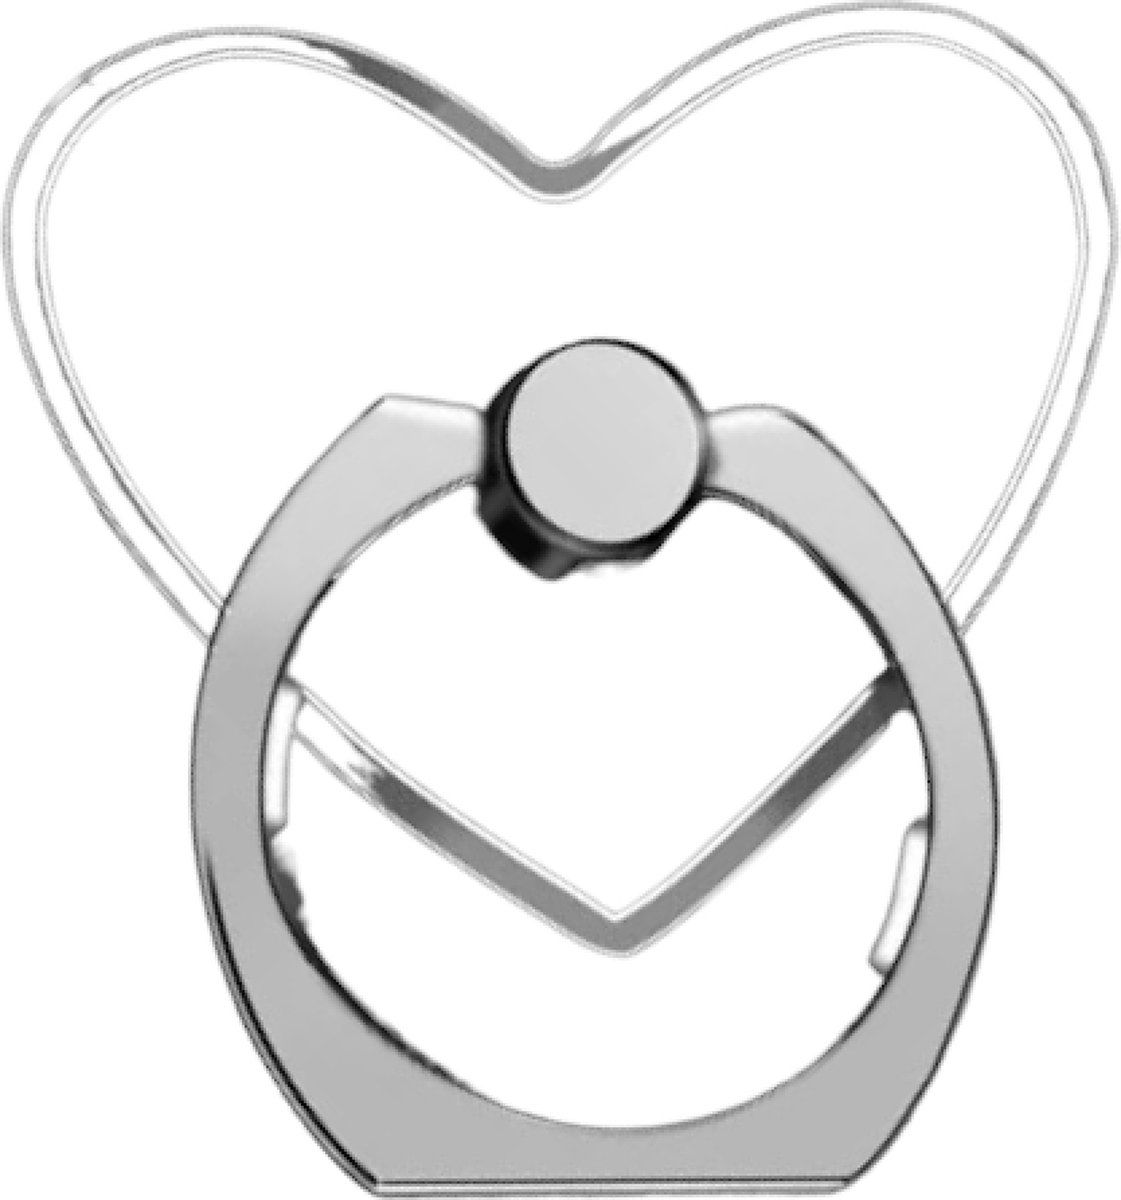 Bijoux by Ive - Transparante hartje ringvinger houder / standaard voor je mobiele telefoon